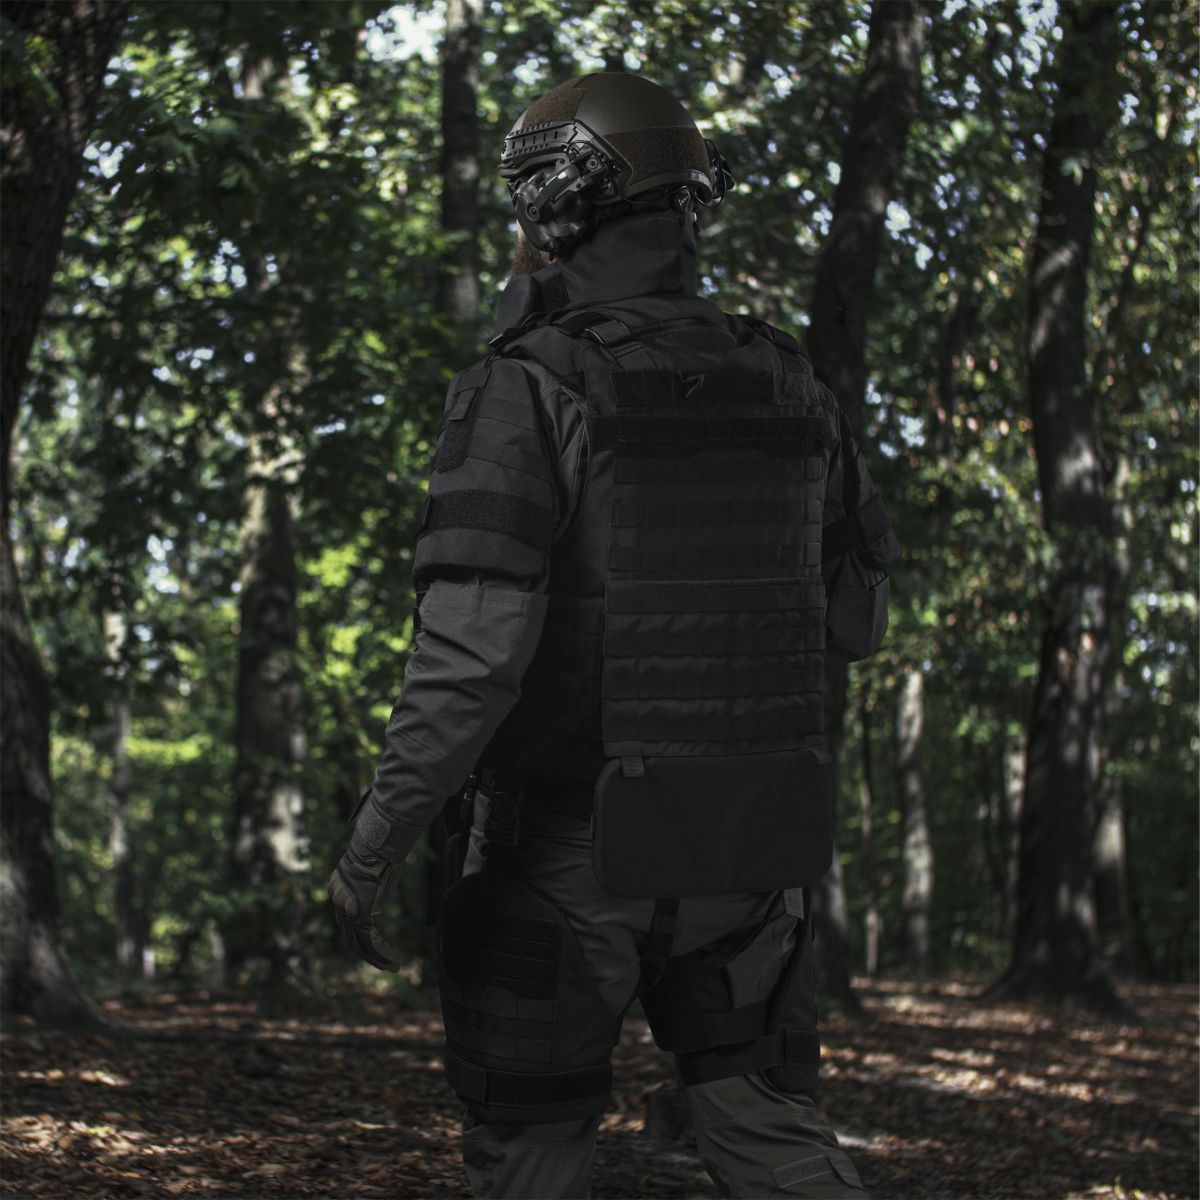 Бронекостюм A.T.A.S. (Advanced Tactical Armor Suit) Level I. Клас захисту – 1. Чорний. L/XL 12